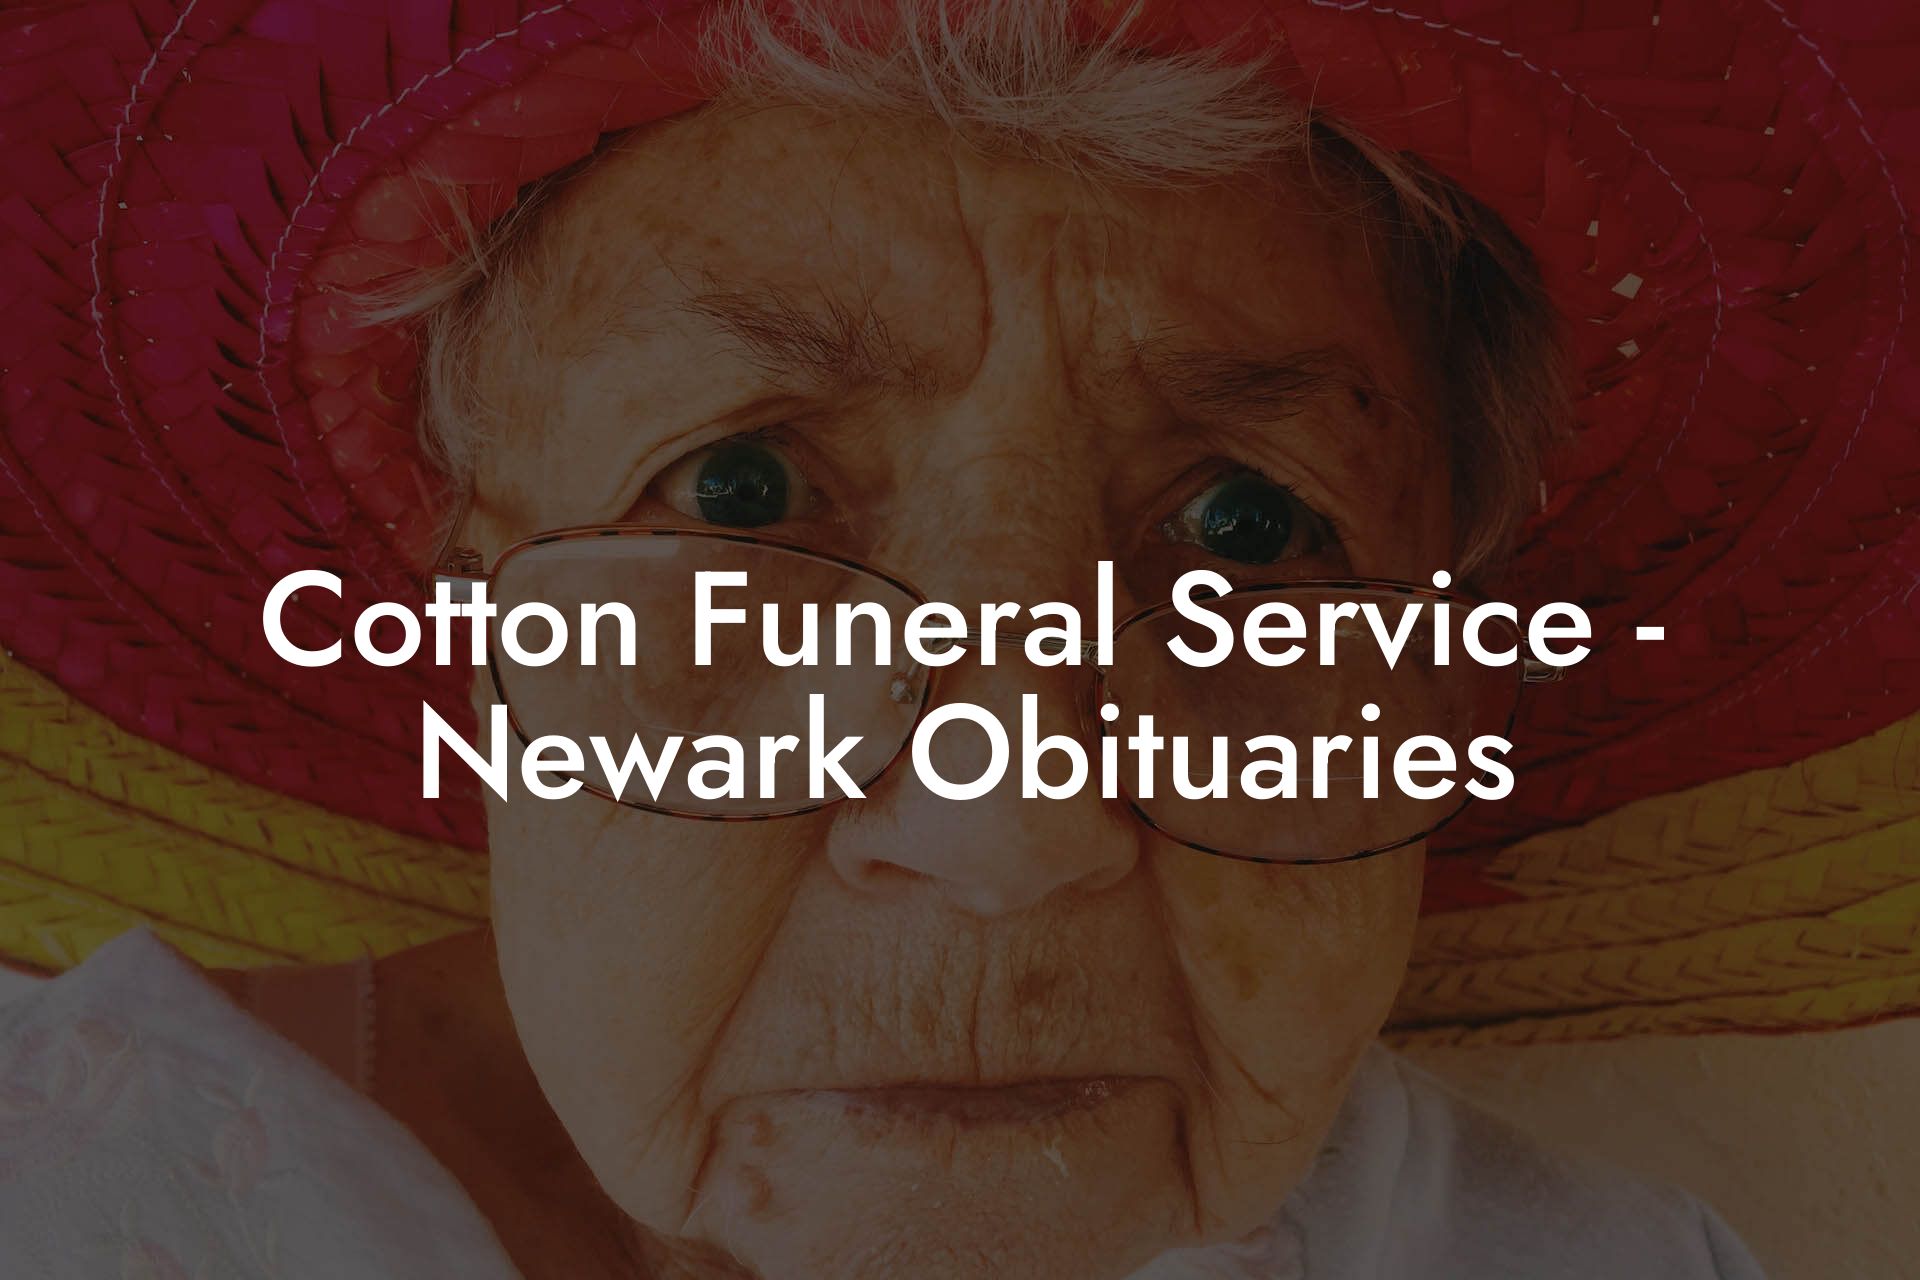 Cotton Funeral Service - Newark Obituaries